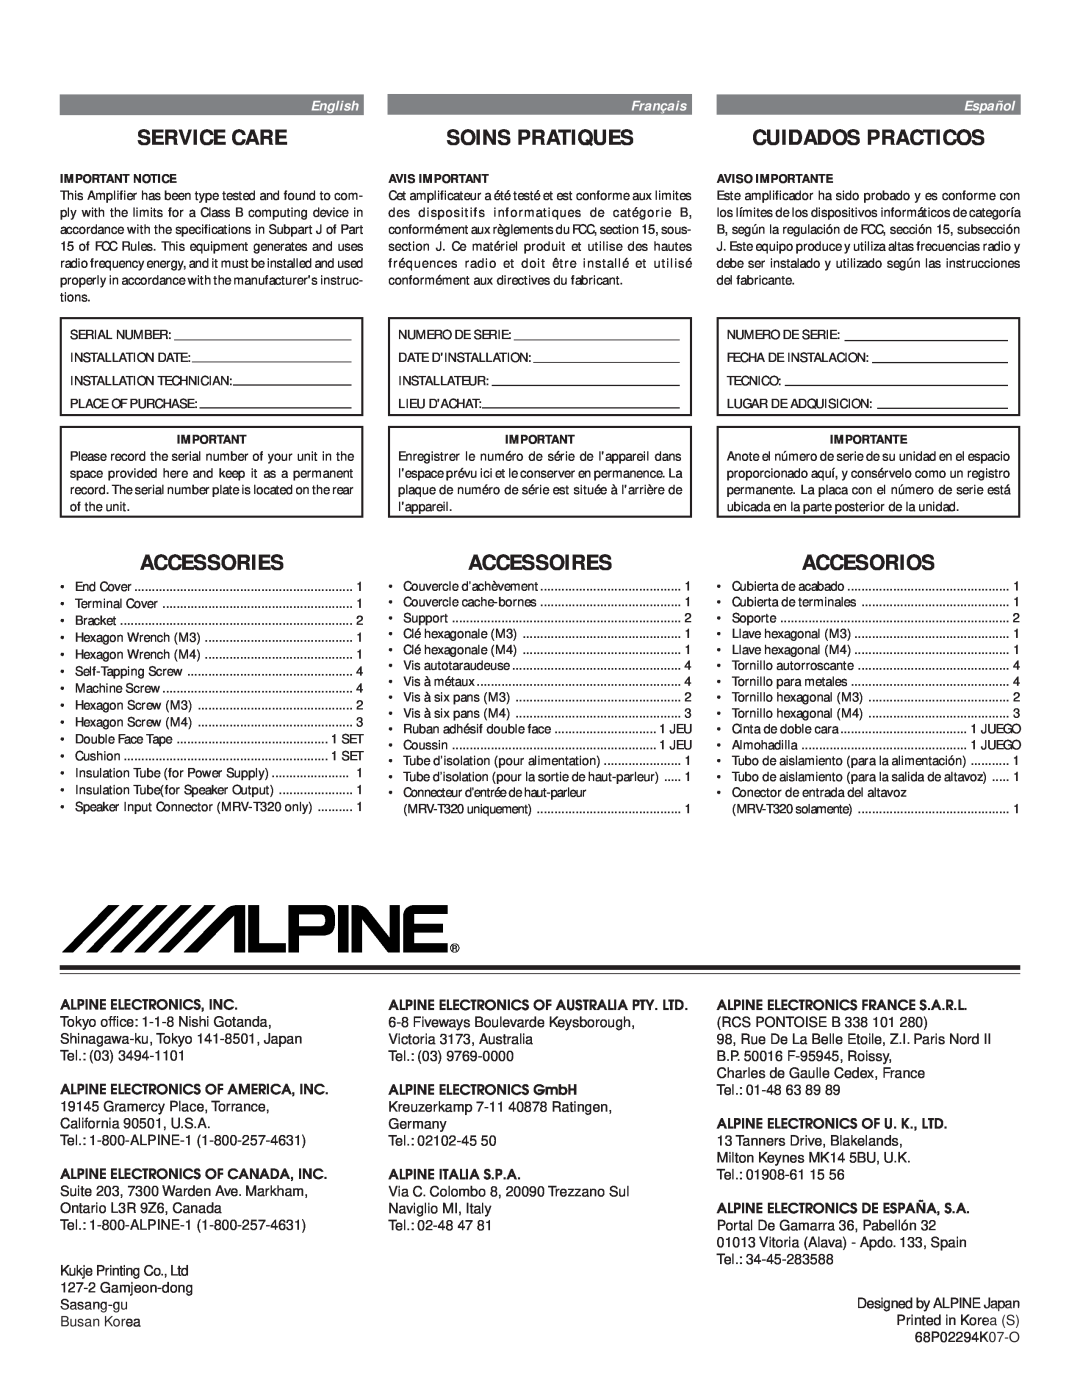 Alpine MRV-T320 Service Care, Soins Pratiques, Cuidados Practicos, Accessories, Accessoires, Accesorios, English, Français 